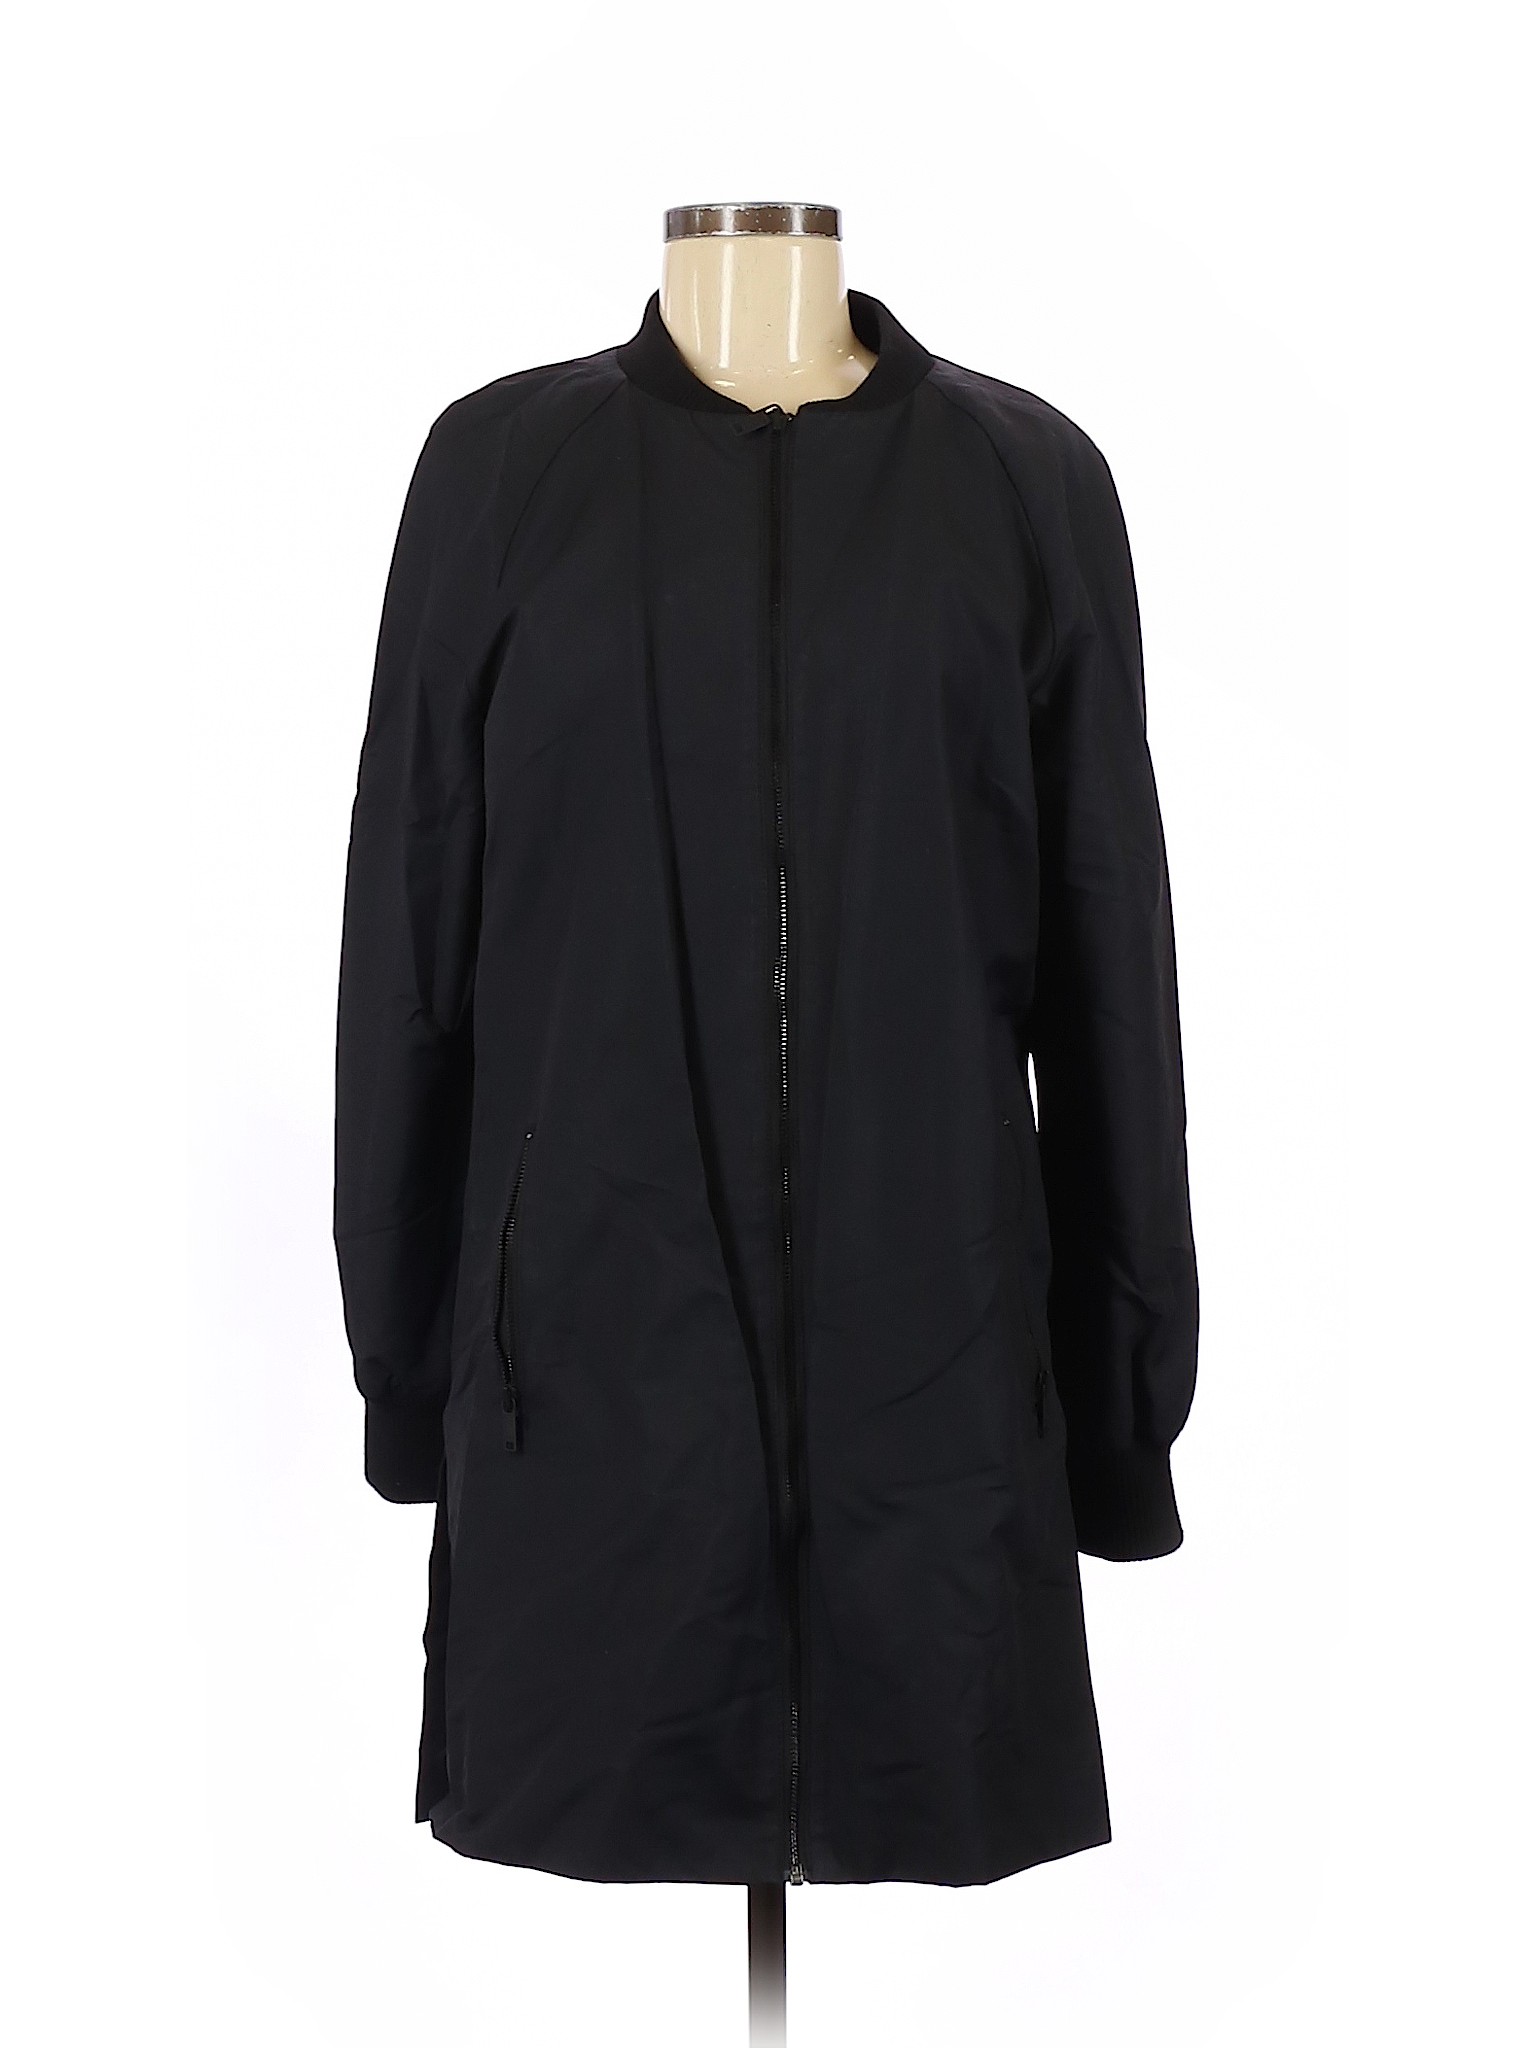 DKNY Women Black Jacket XS | eBay